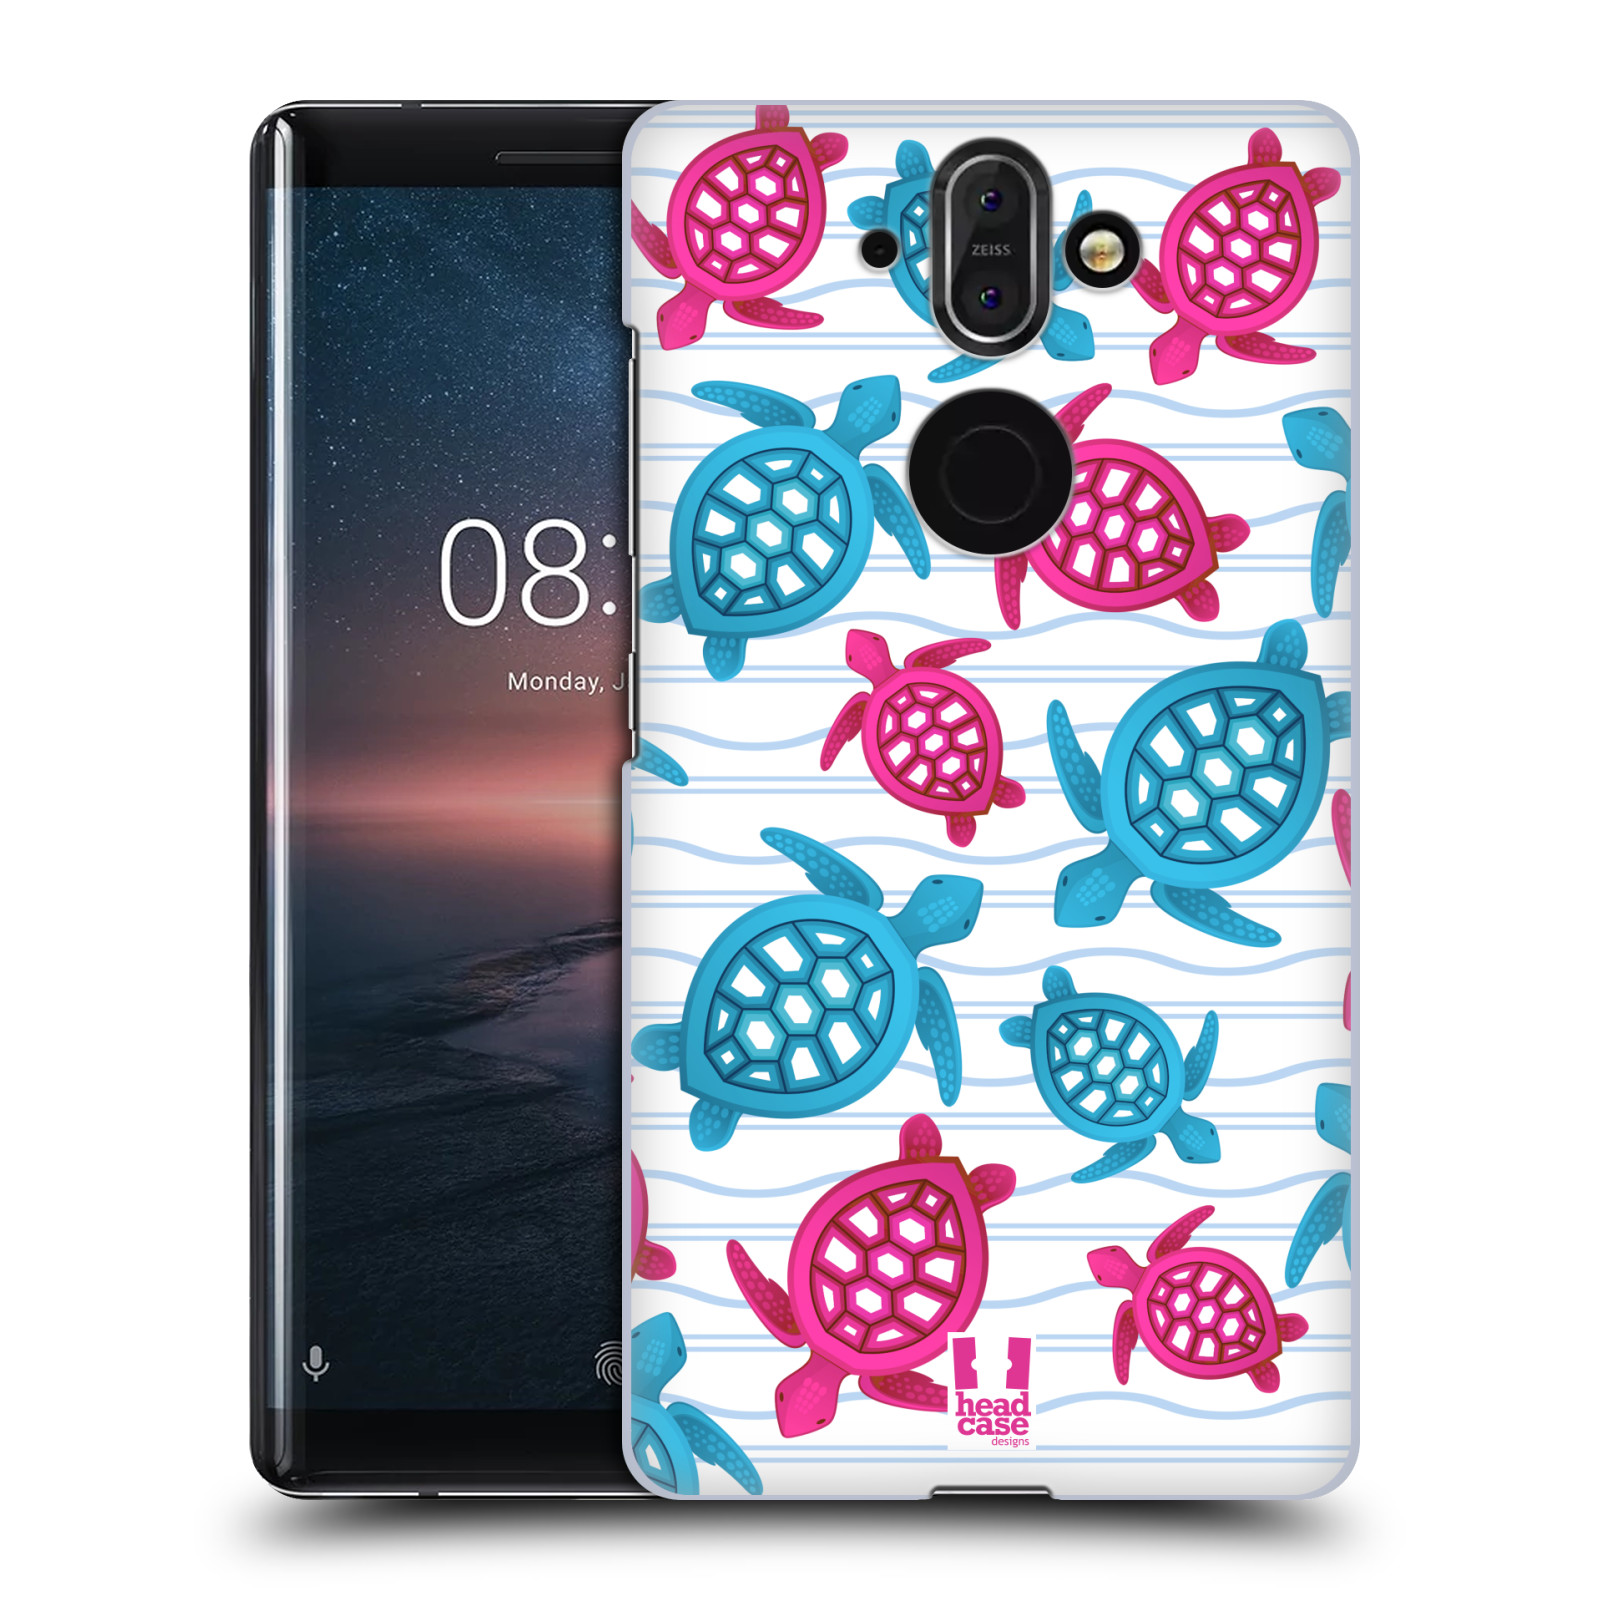 Zadní obal pro mobil Nokia 8 Sirocco - HEAD CASE - kreslený mořský vzor želvičky